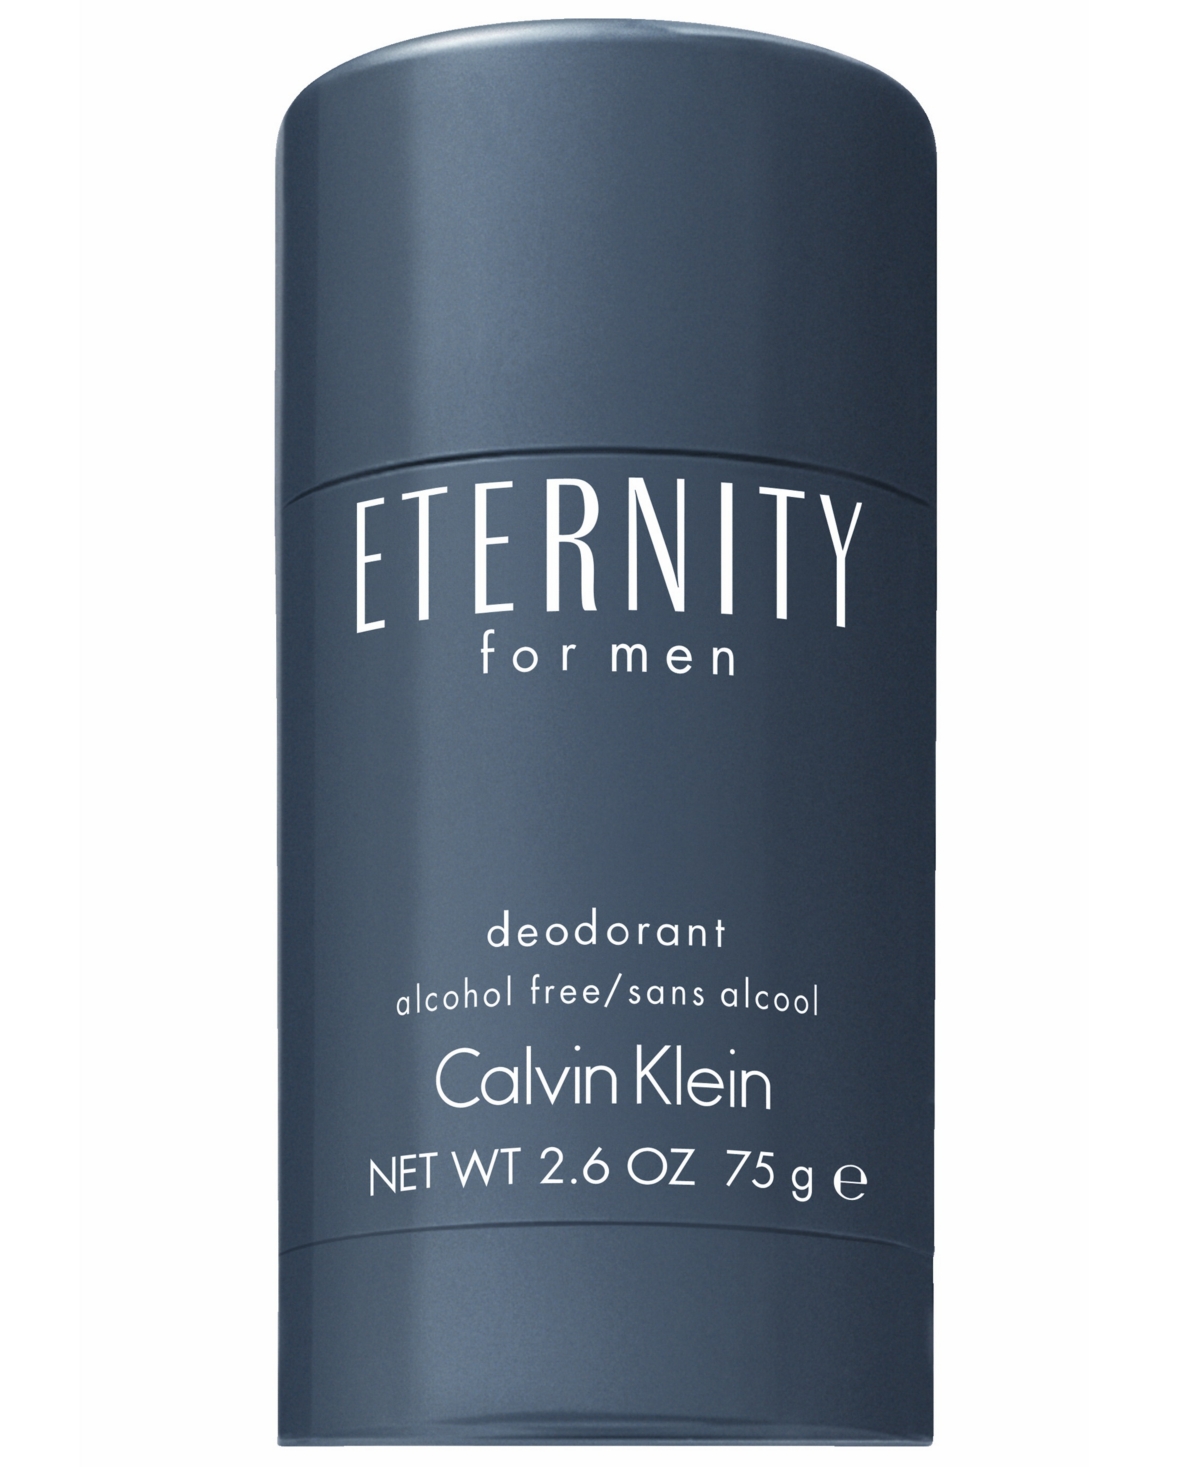 Eternity for Men Deodorant, 2.6 oz. - ETERNITY for men Deodorant